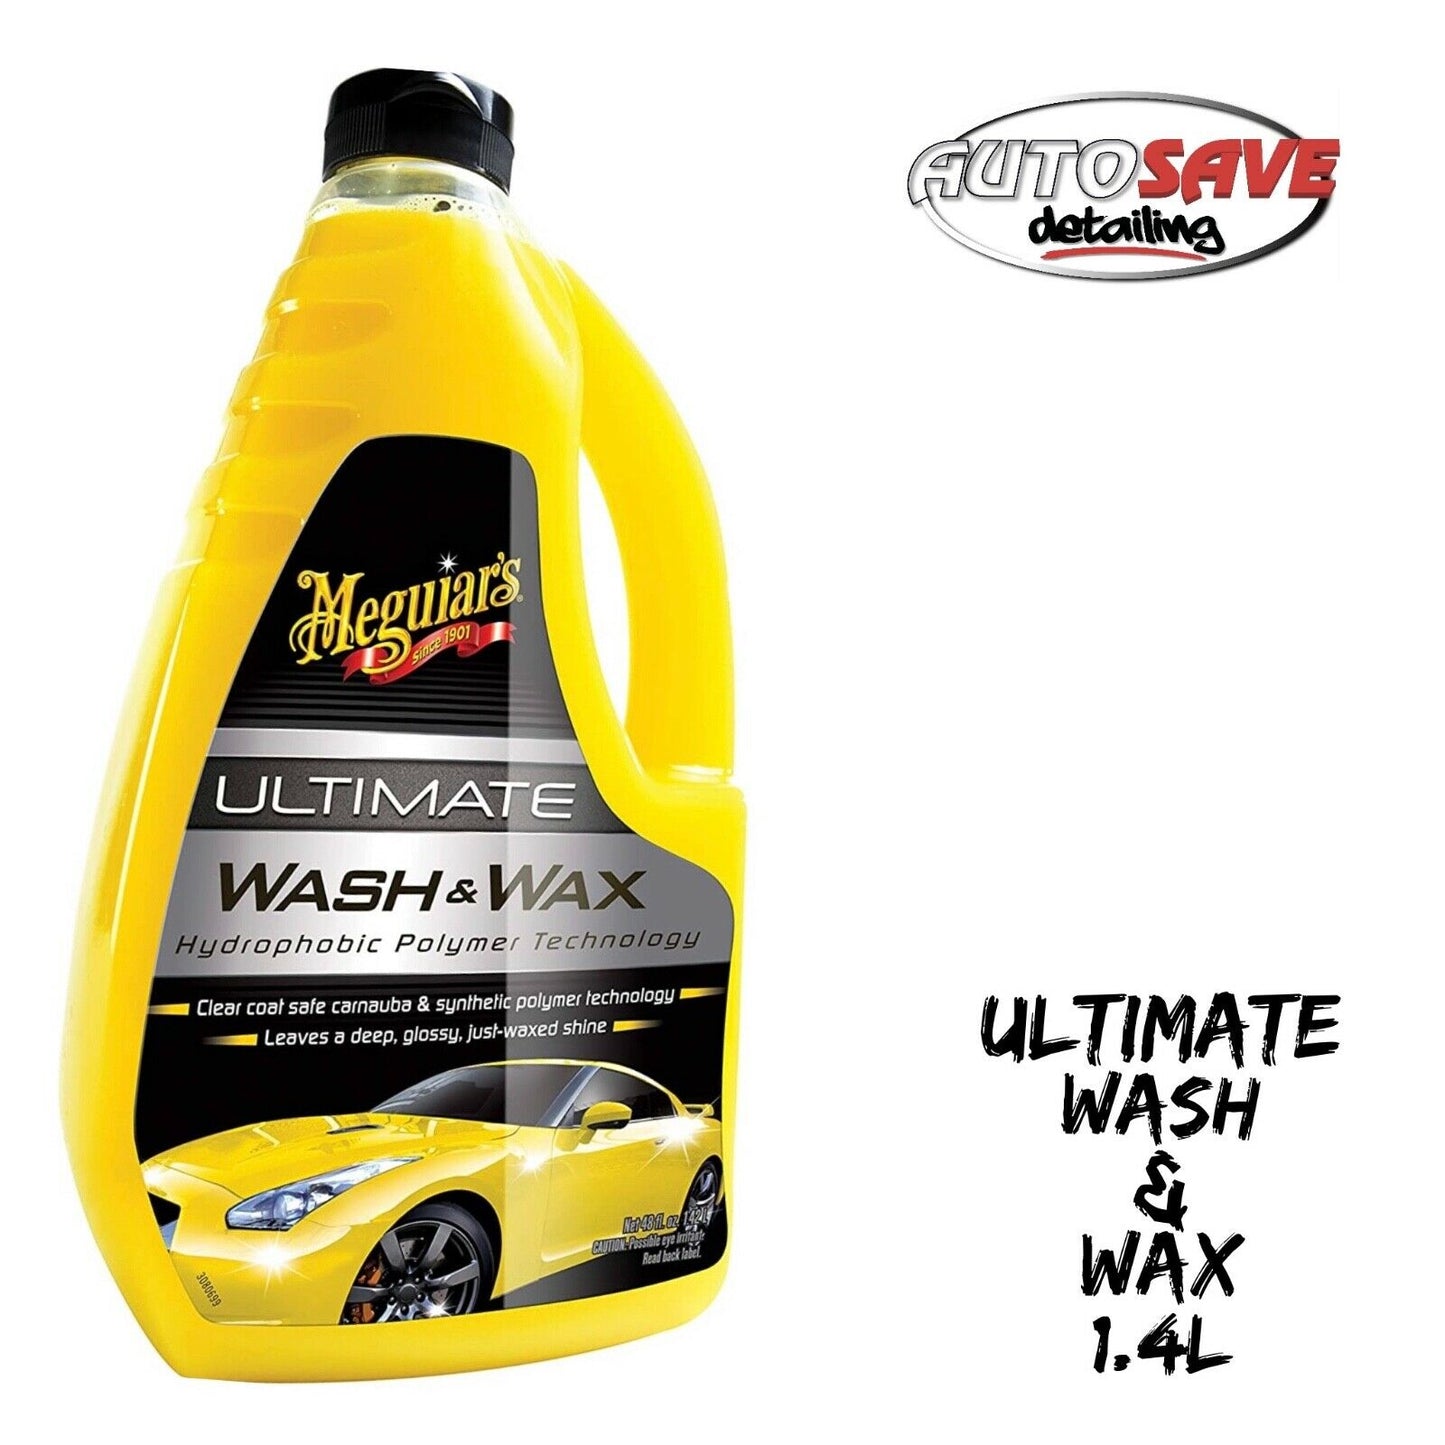 Ultimate Wash And Wax 1.4L Car Shampoo Car Care Cleaning - Meguiars G17748EU